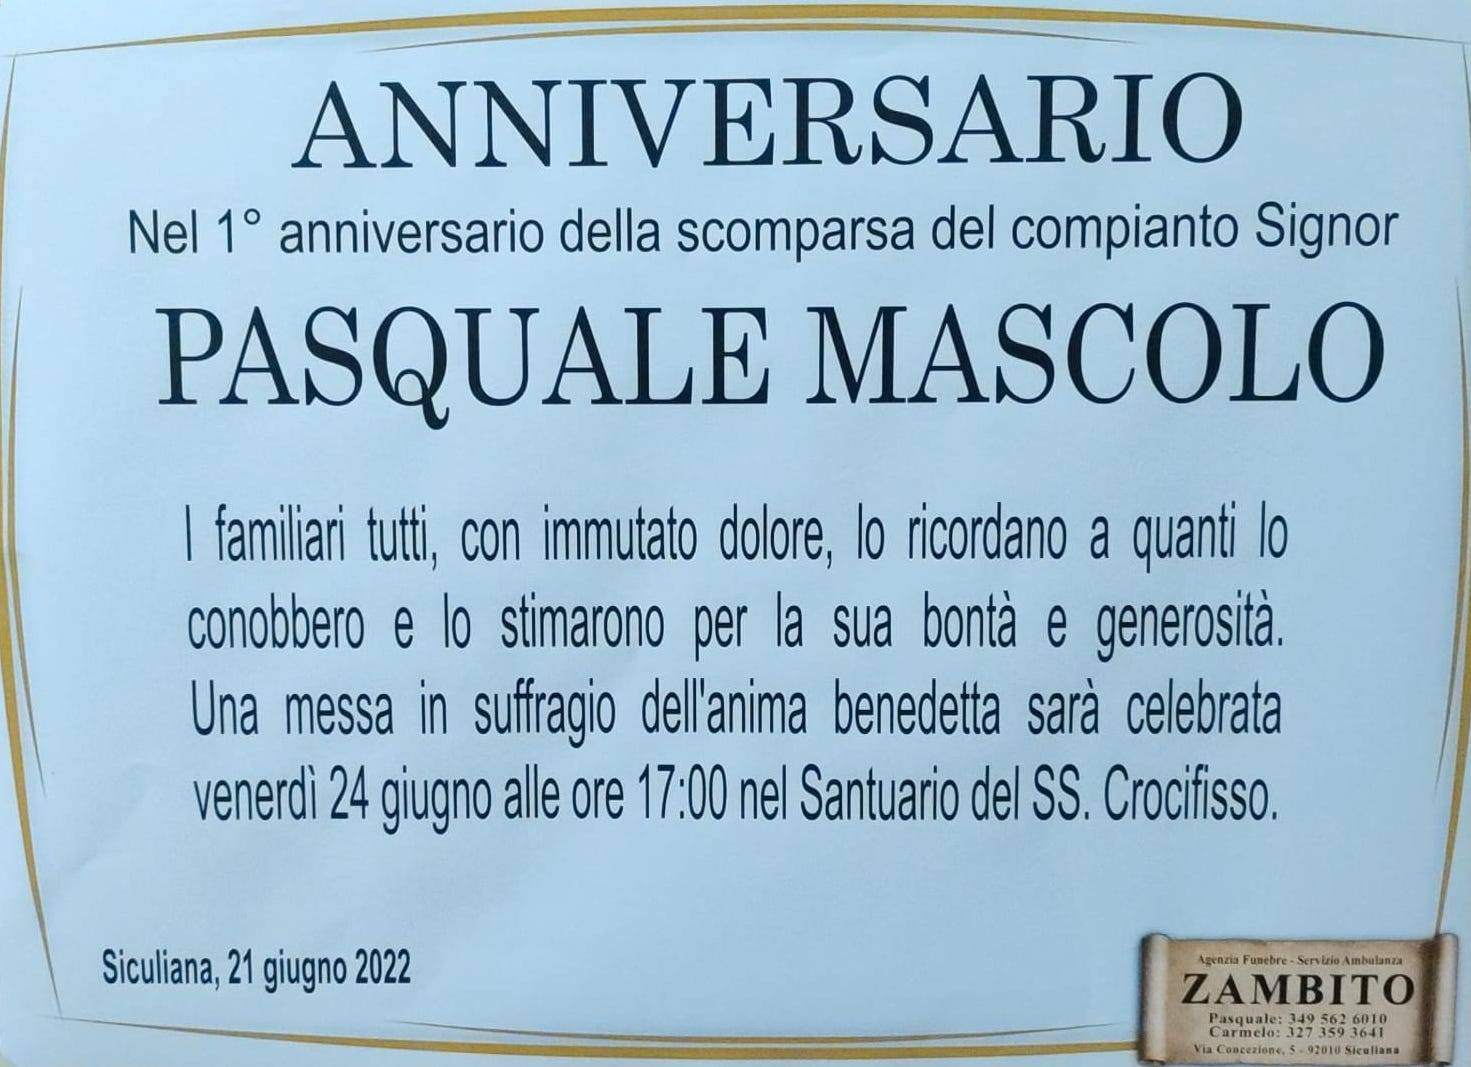 Pasquale Mascolo